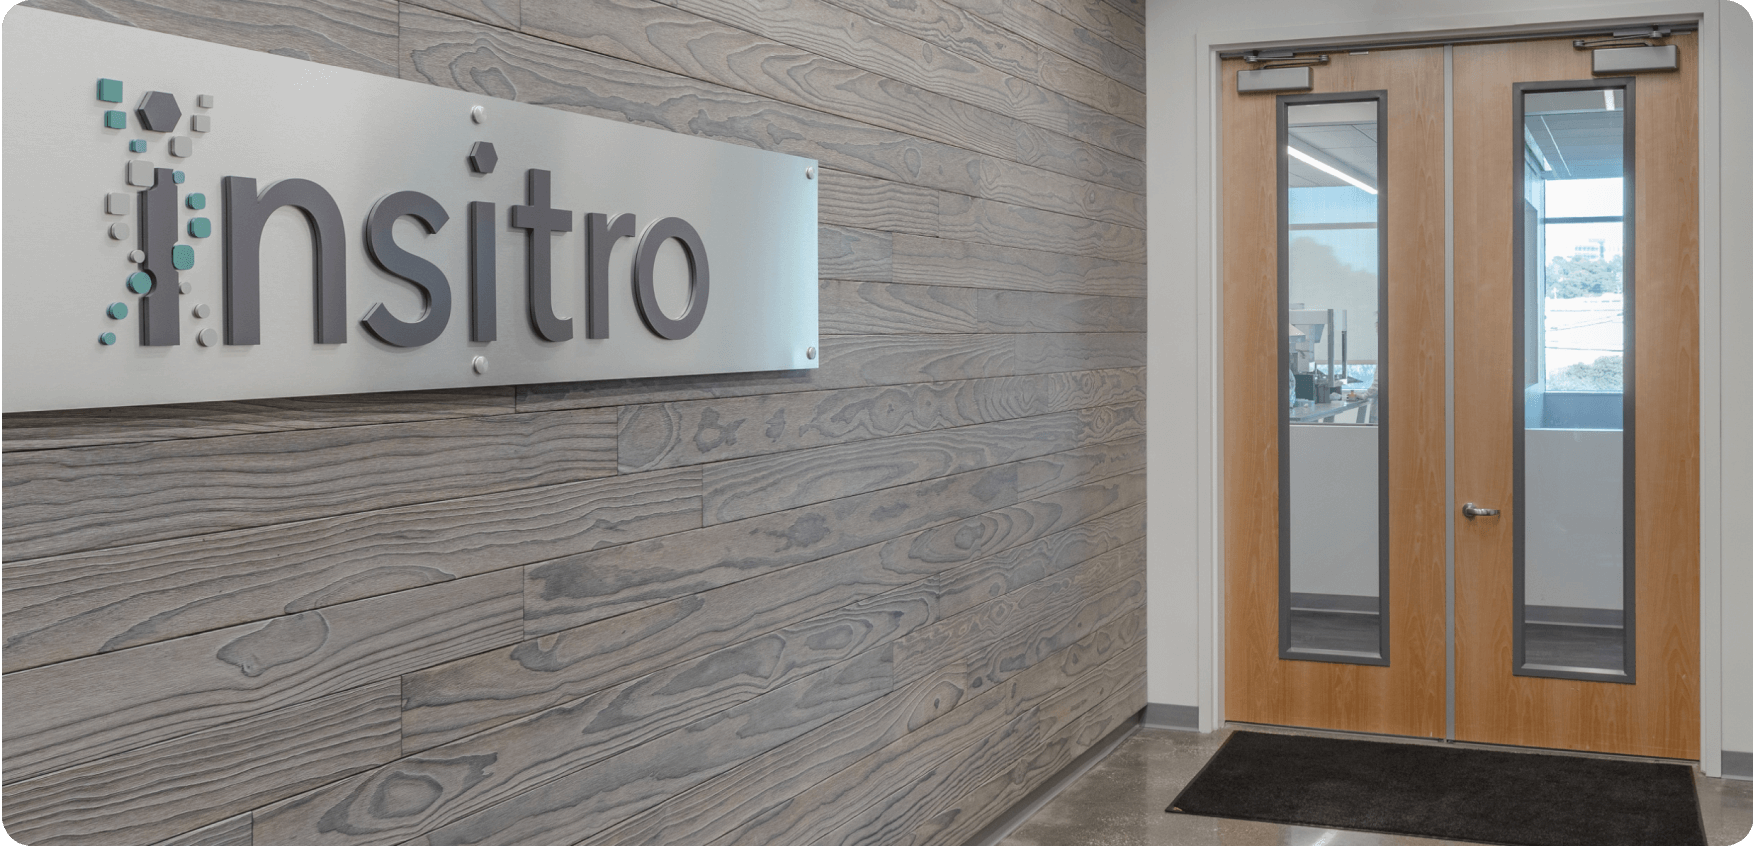 Insitro office entryway with logo signage